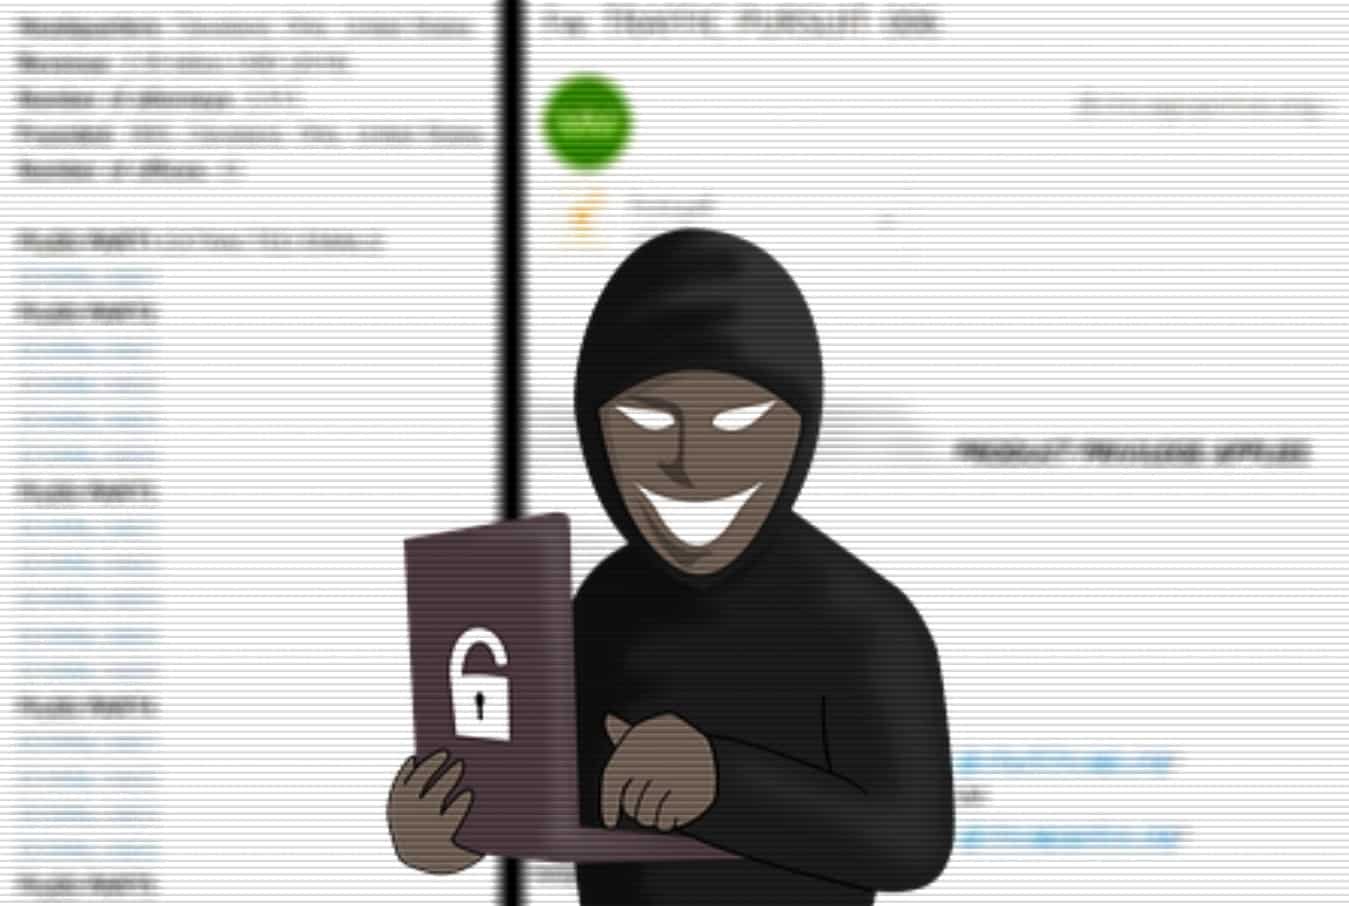 Clop ransomware gang leaks sensitive Jones Day files on dark web